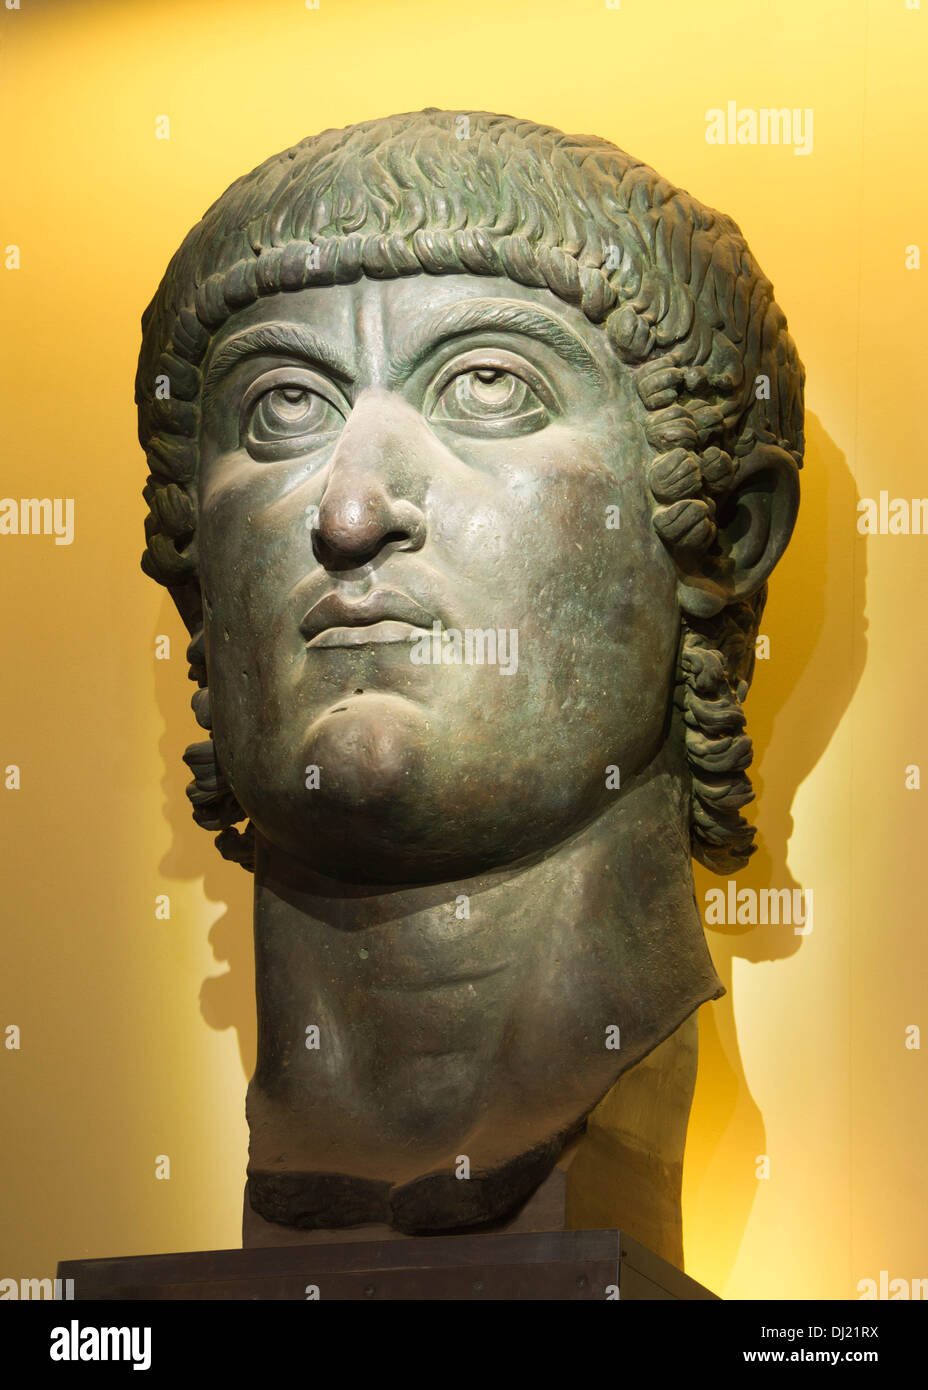 Kopf des Kaisers Constantine I, Teil einer kolossalen Statue. Bronze, römische Kunst, 4. Jahrhundert CER, Musei Capitolini, Rom. Répliqu Stockfoto